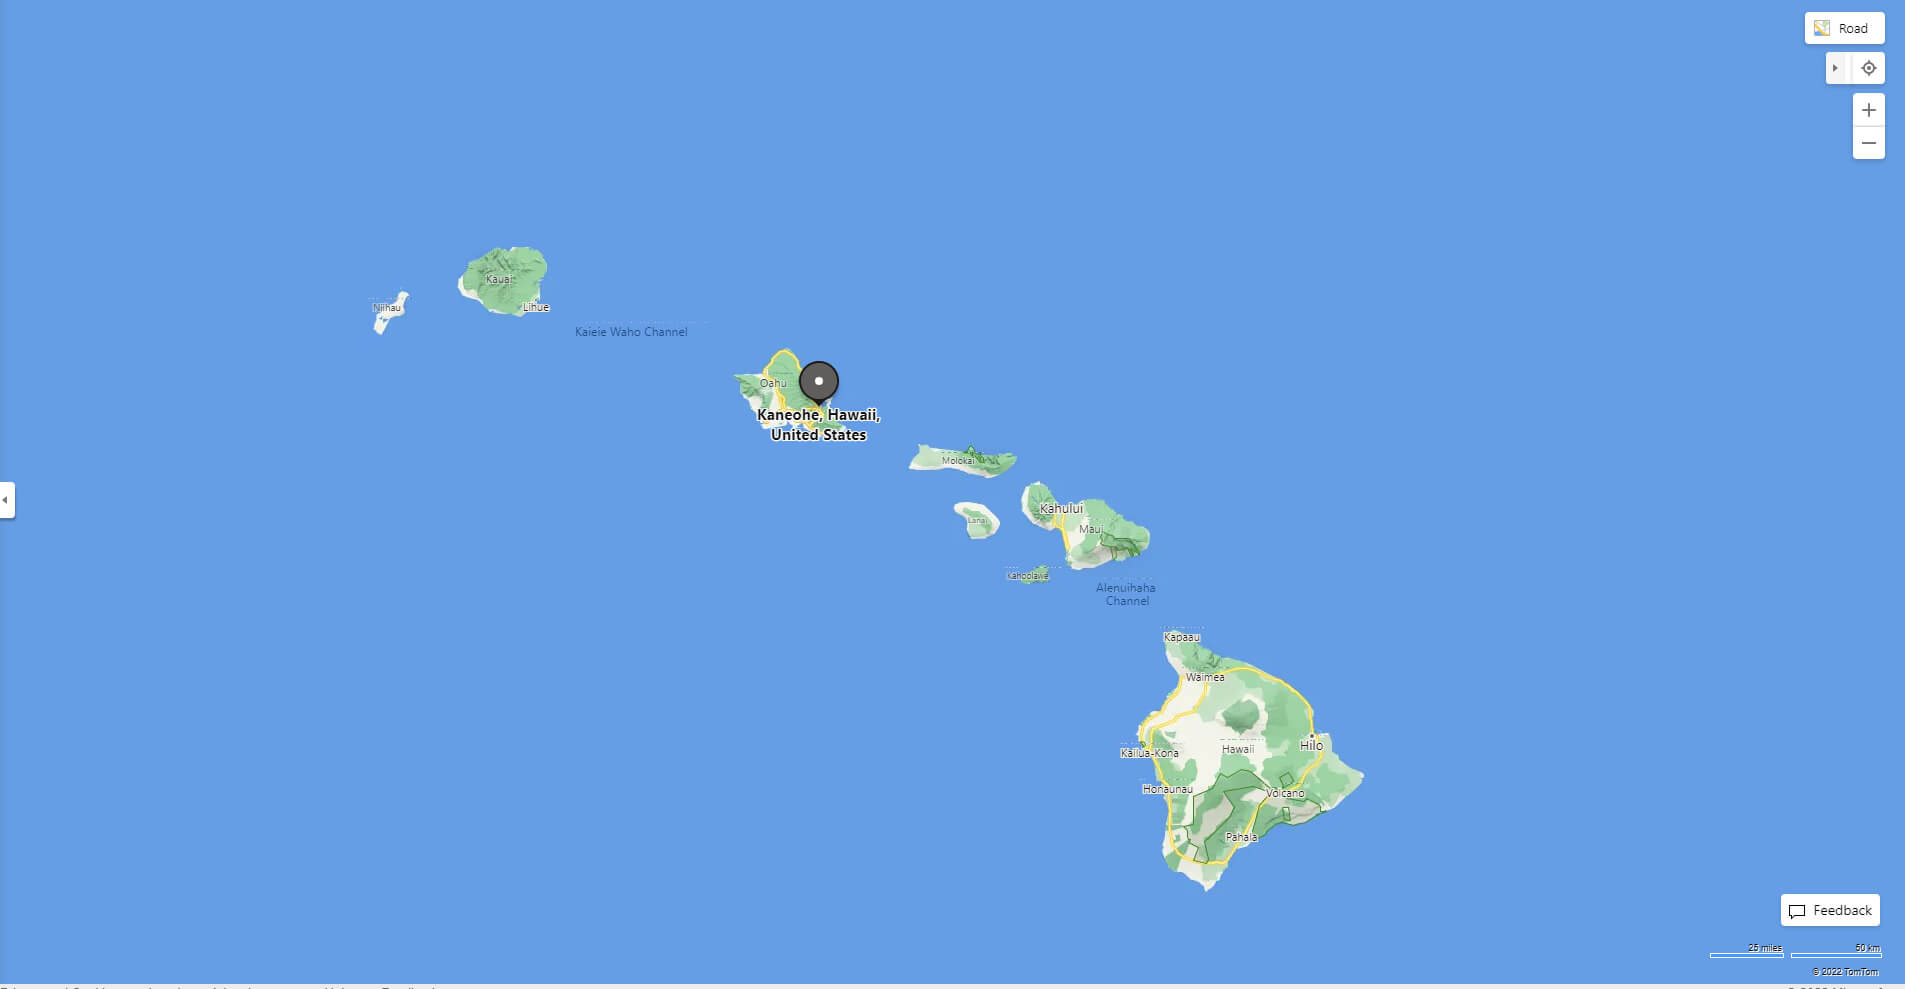 Where is Kaneohe in Hawaii